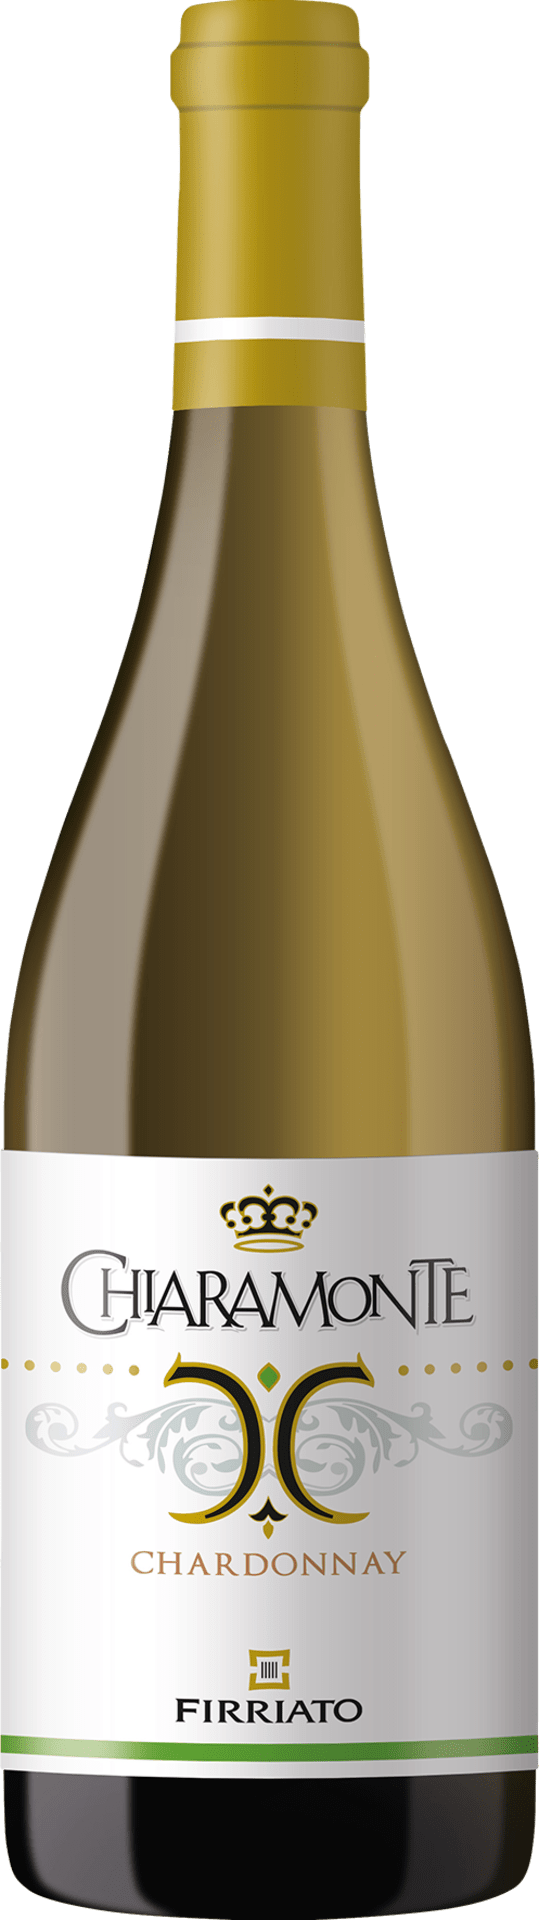 Chiaramonte Chardonnay Terre Siciliane IGT